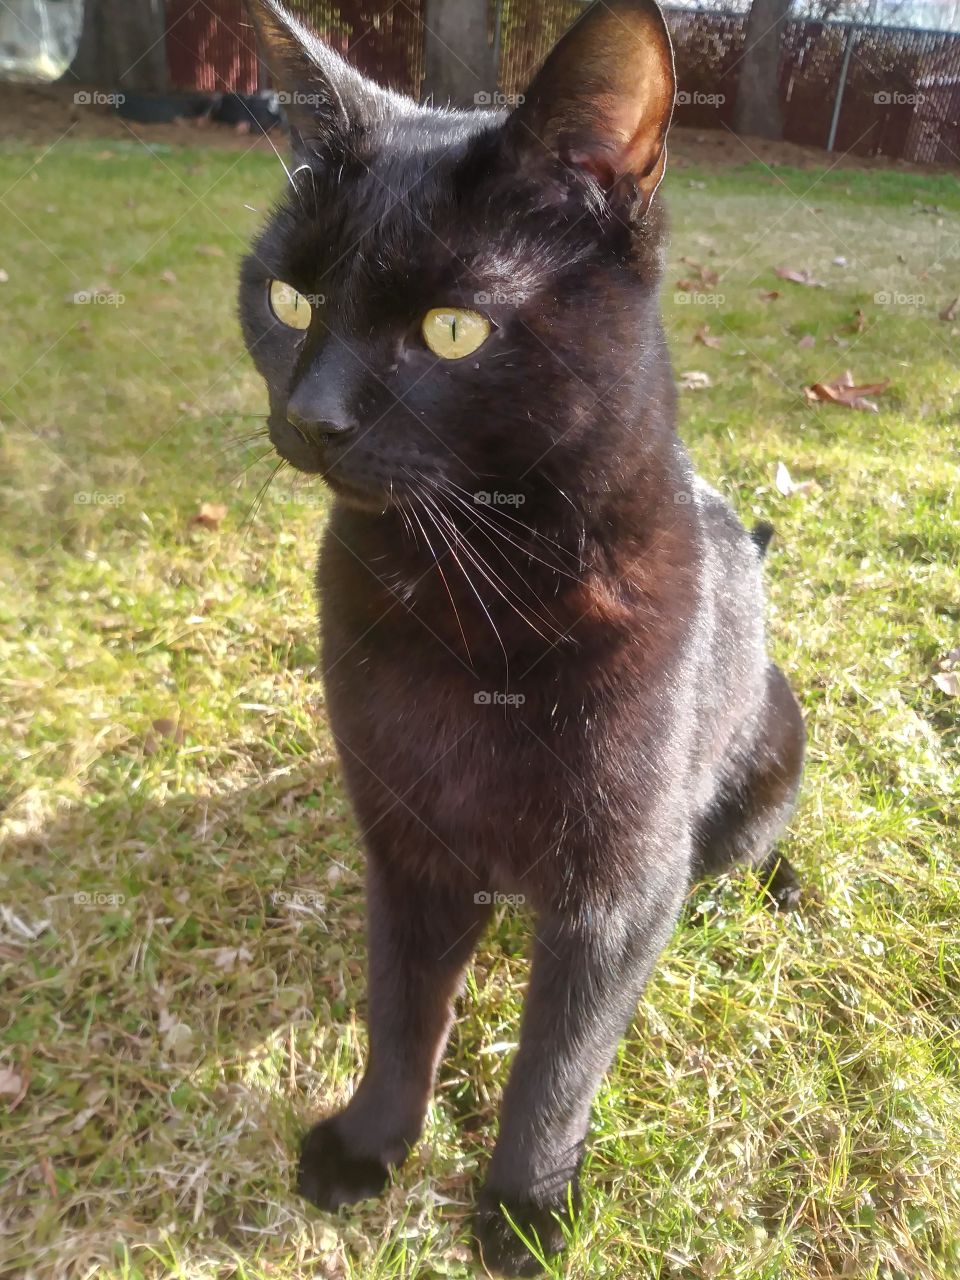 A black cat named Sebastian enjoying the day 💖